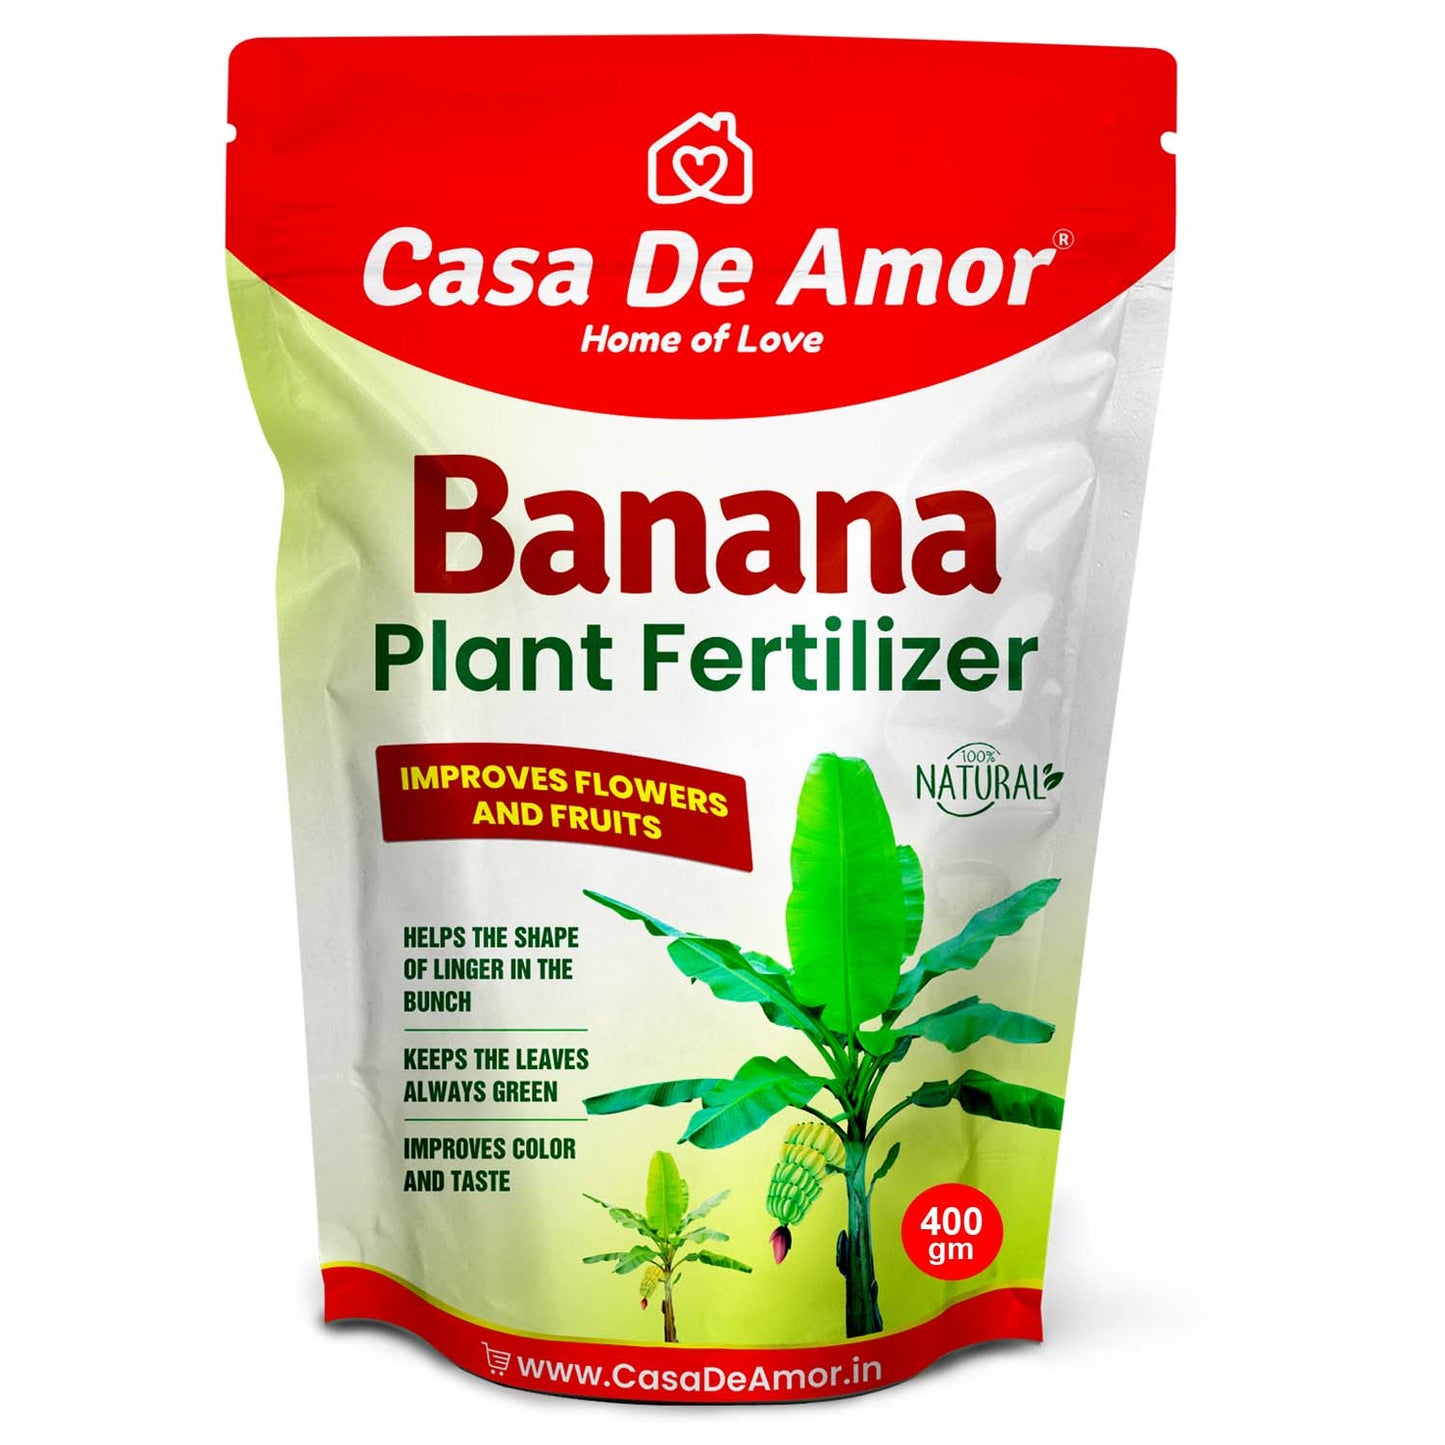 Casa De Amor Banana Plant Fertilizer, Plant Feeds & Growth Promoter for Banana Plants